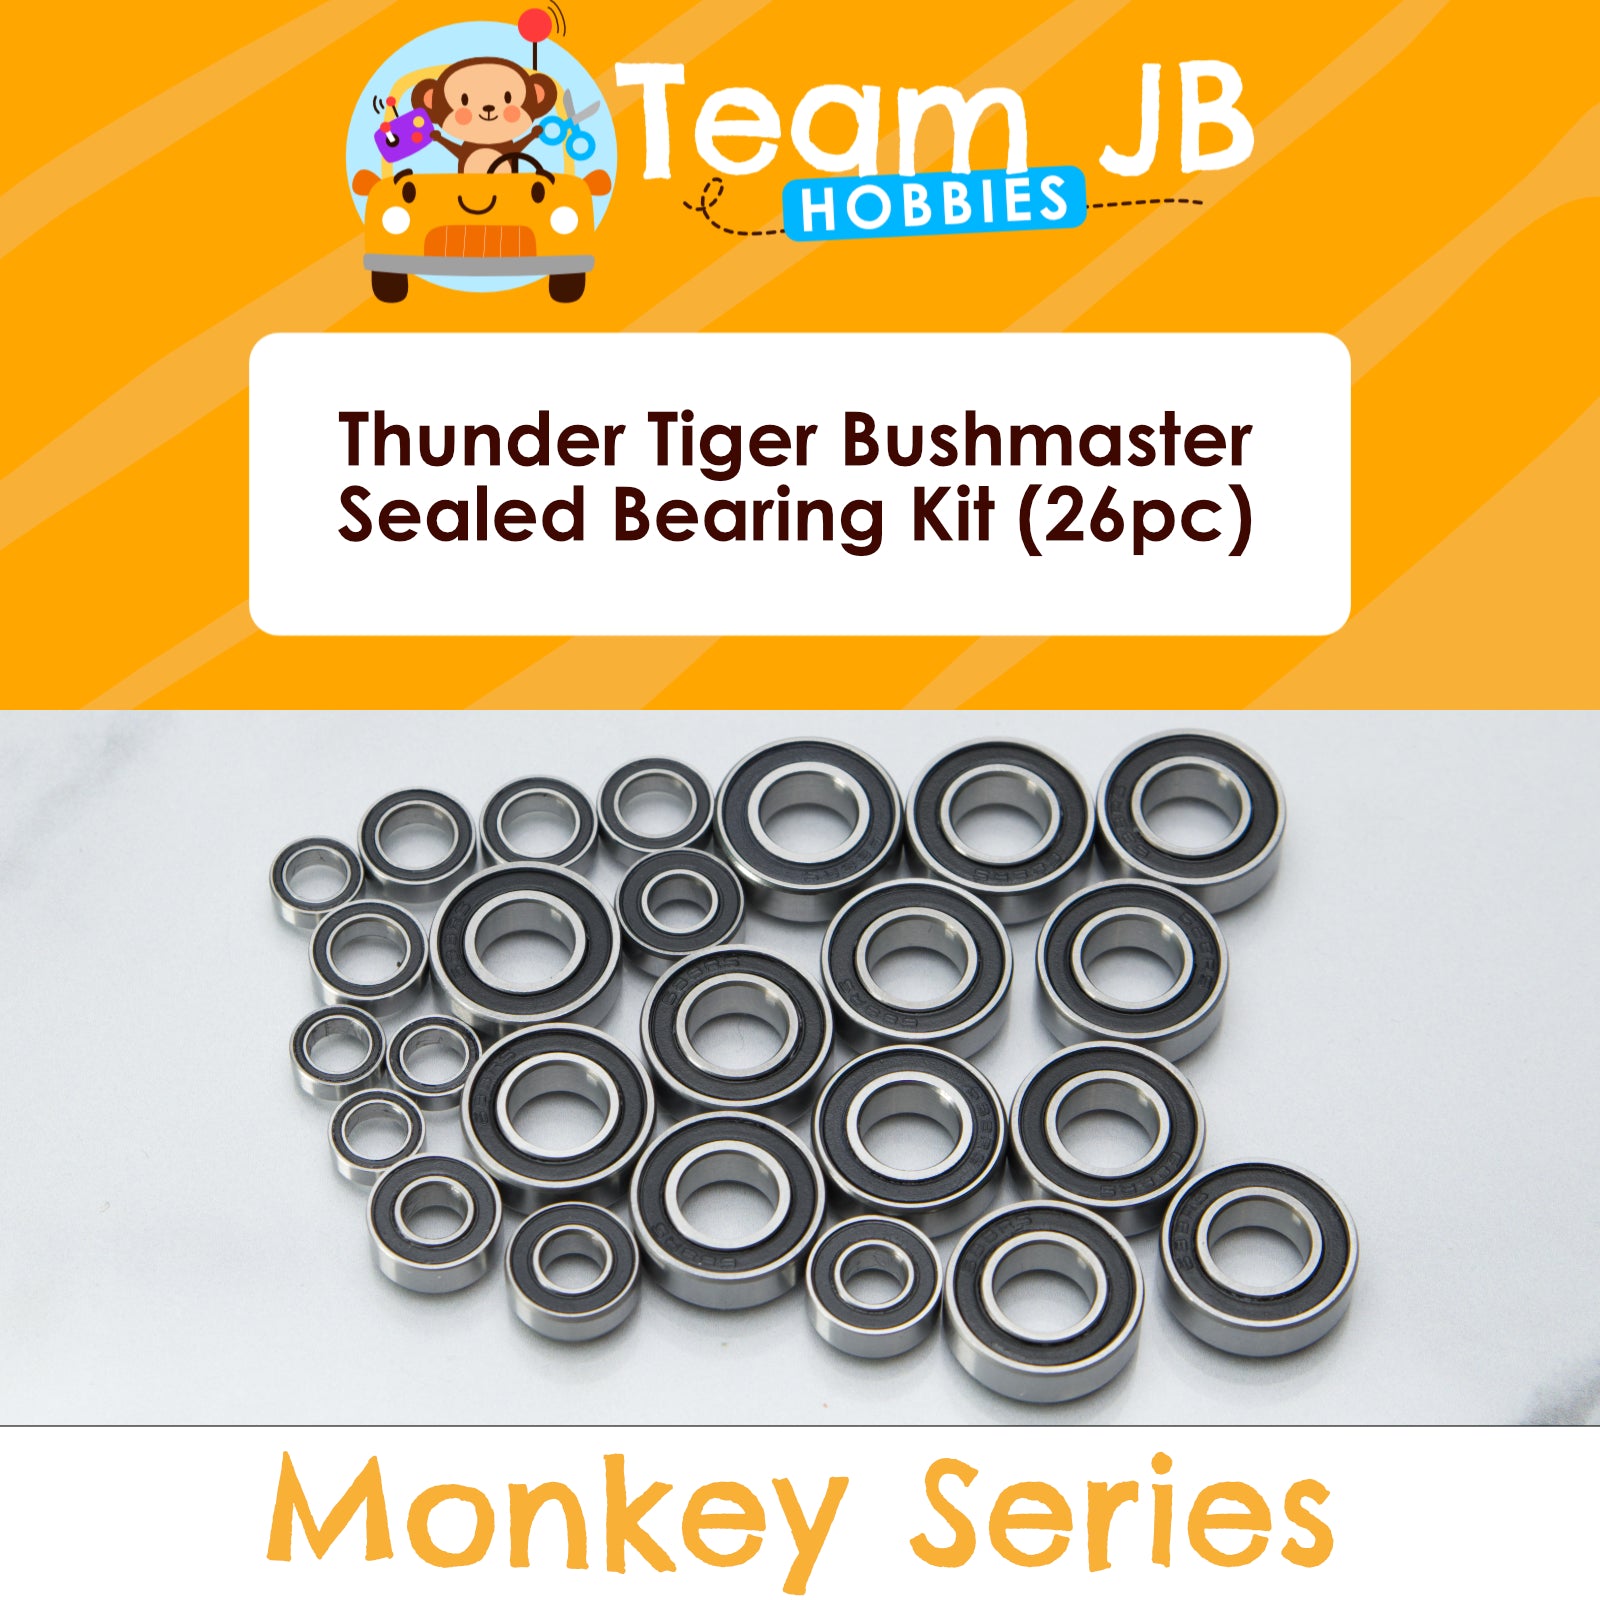 Thunder Tiger Bushmaster - Sealed Bearing Kit